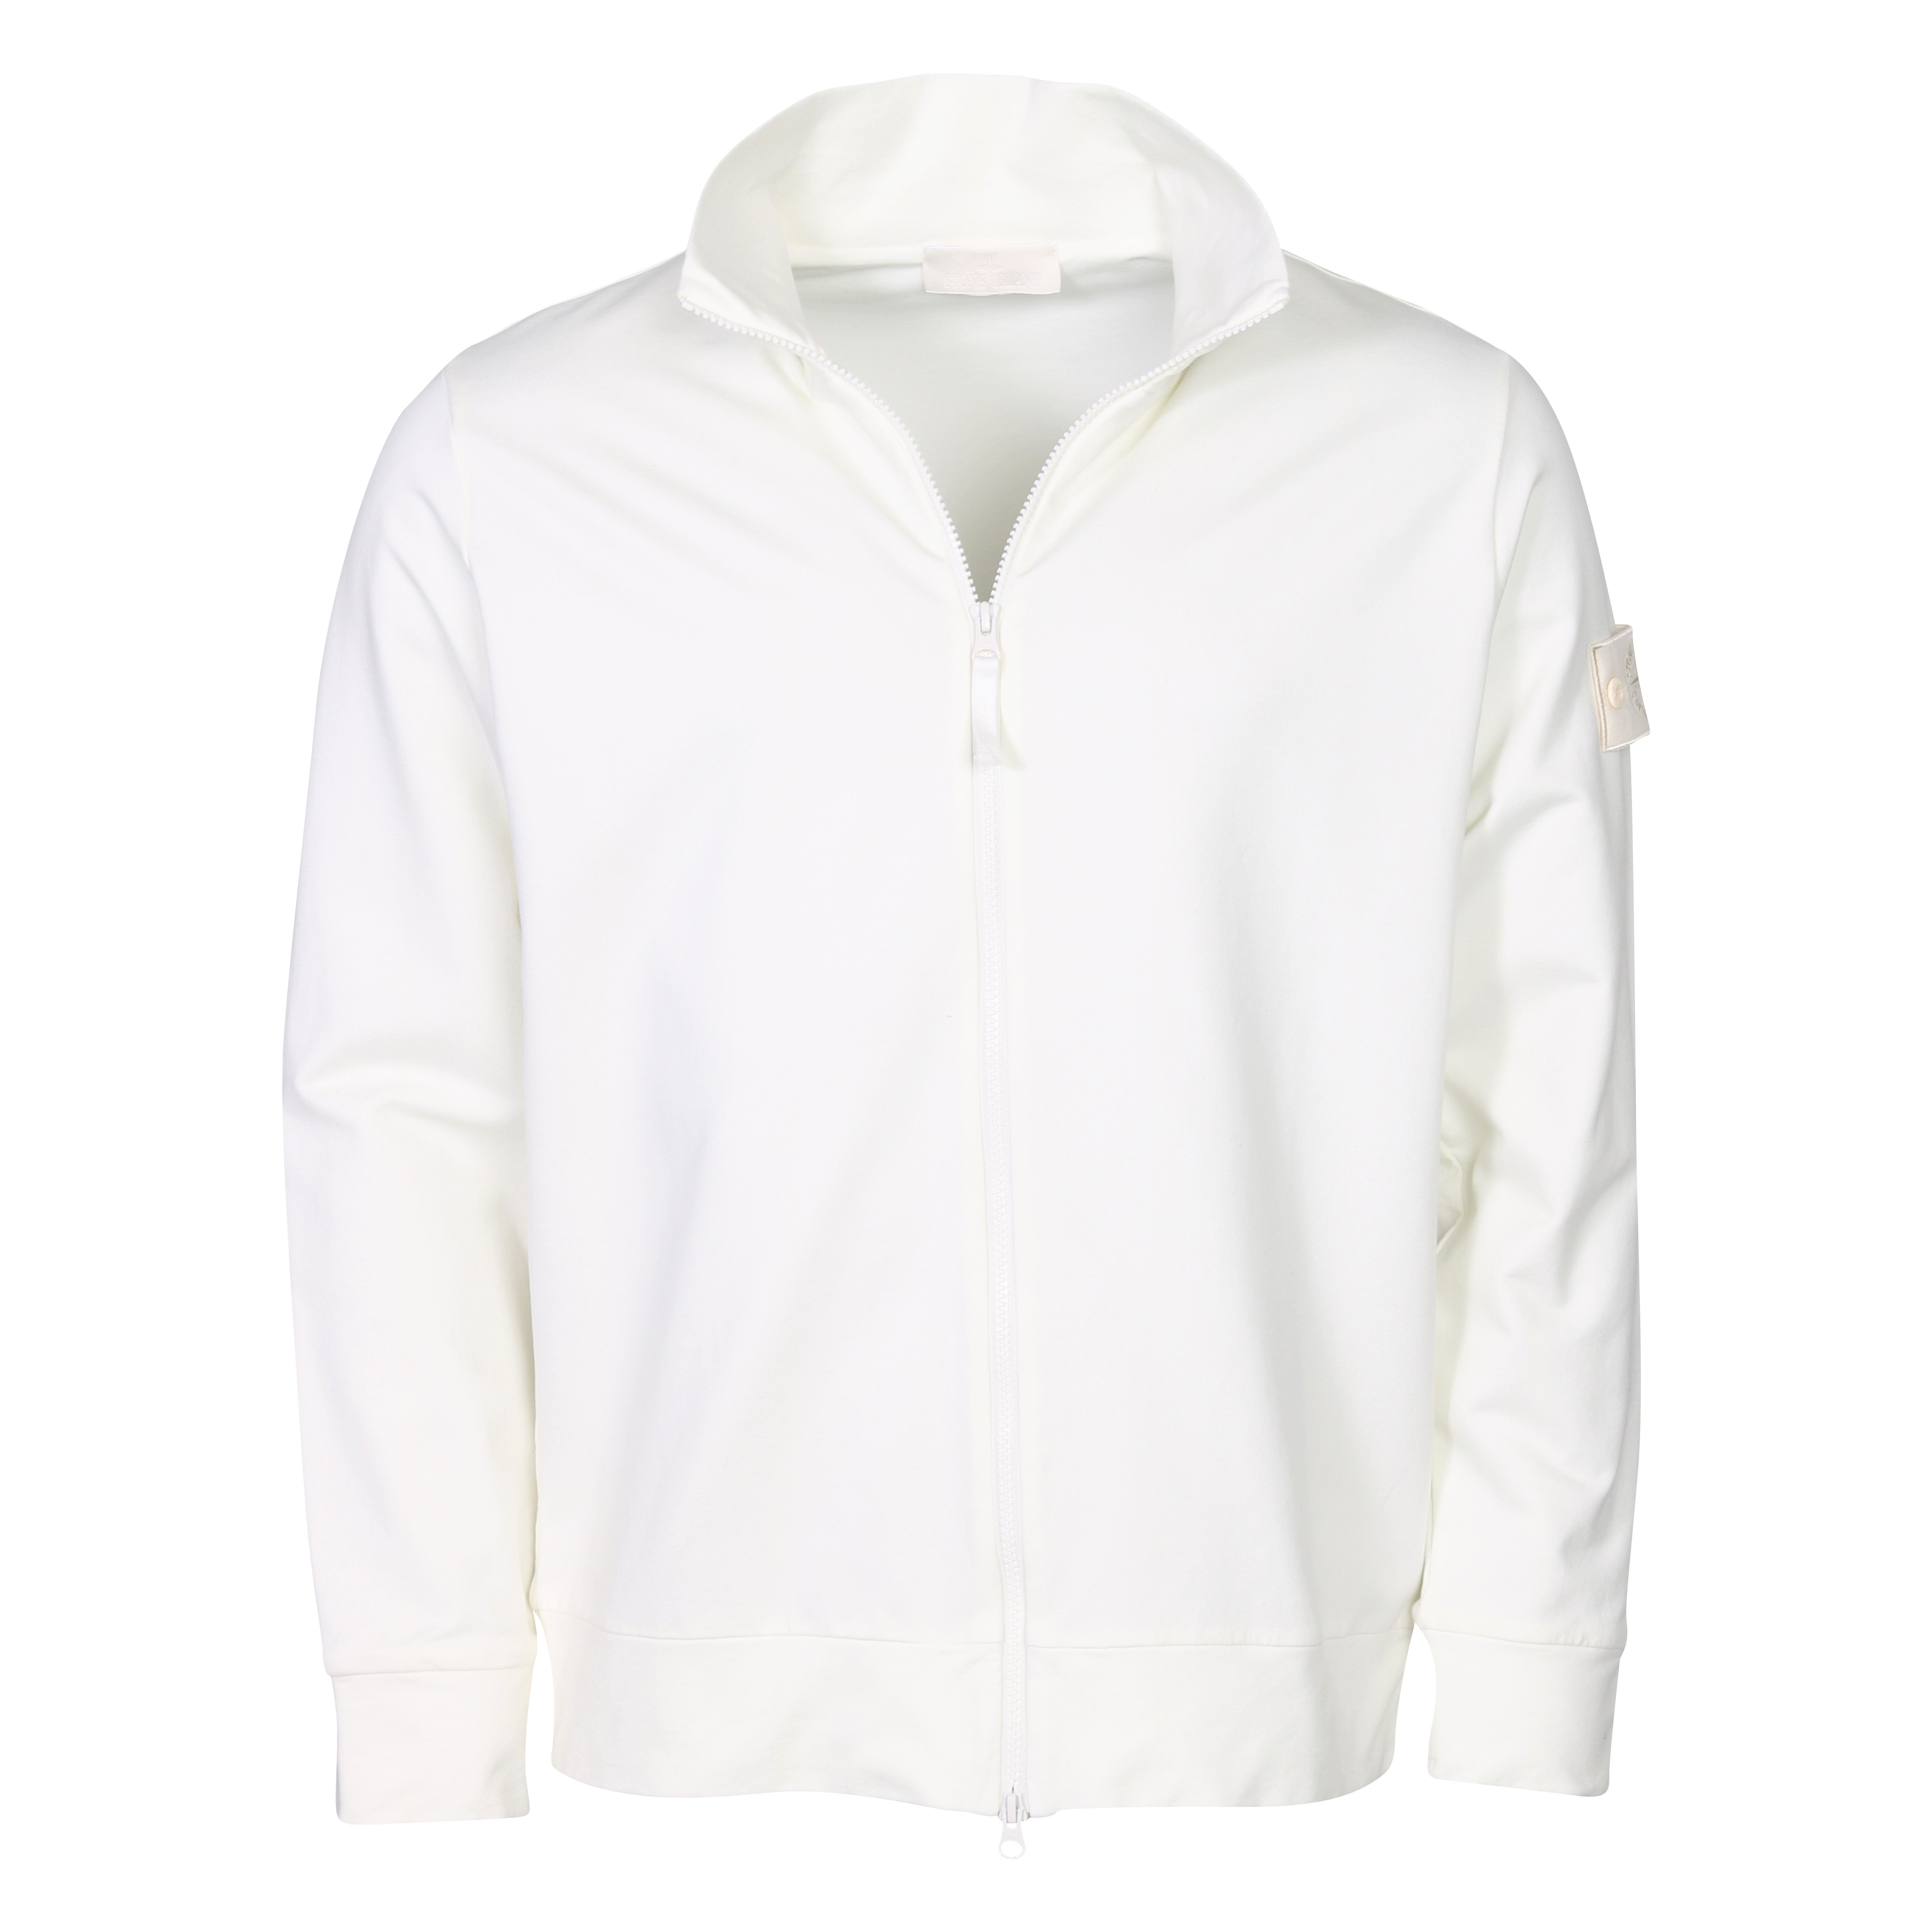 Stone Island Ghost Piece Zip Sweater in Off White XL